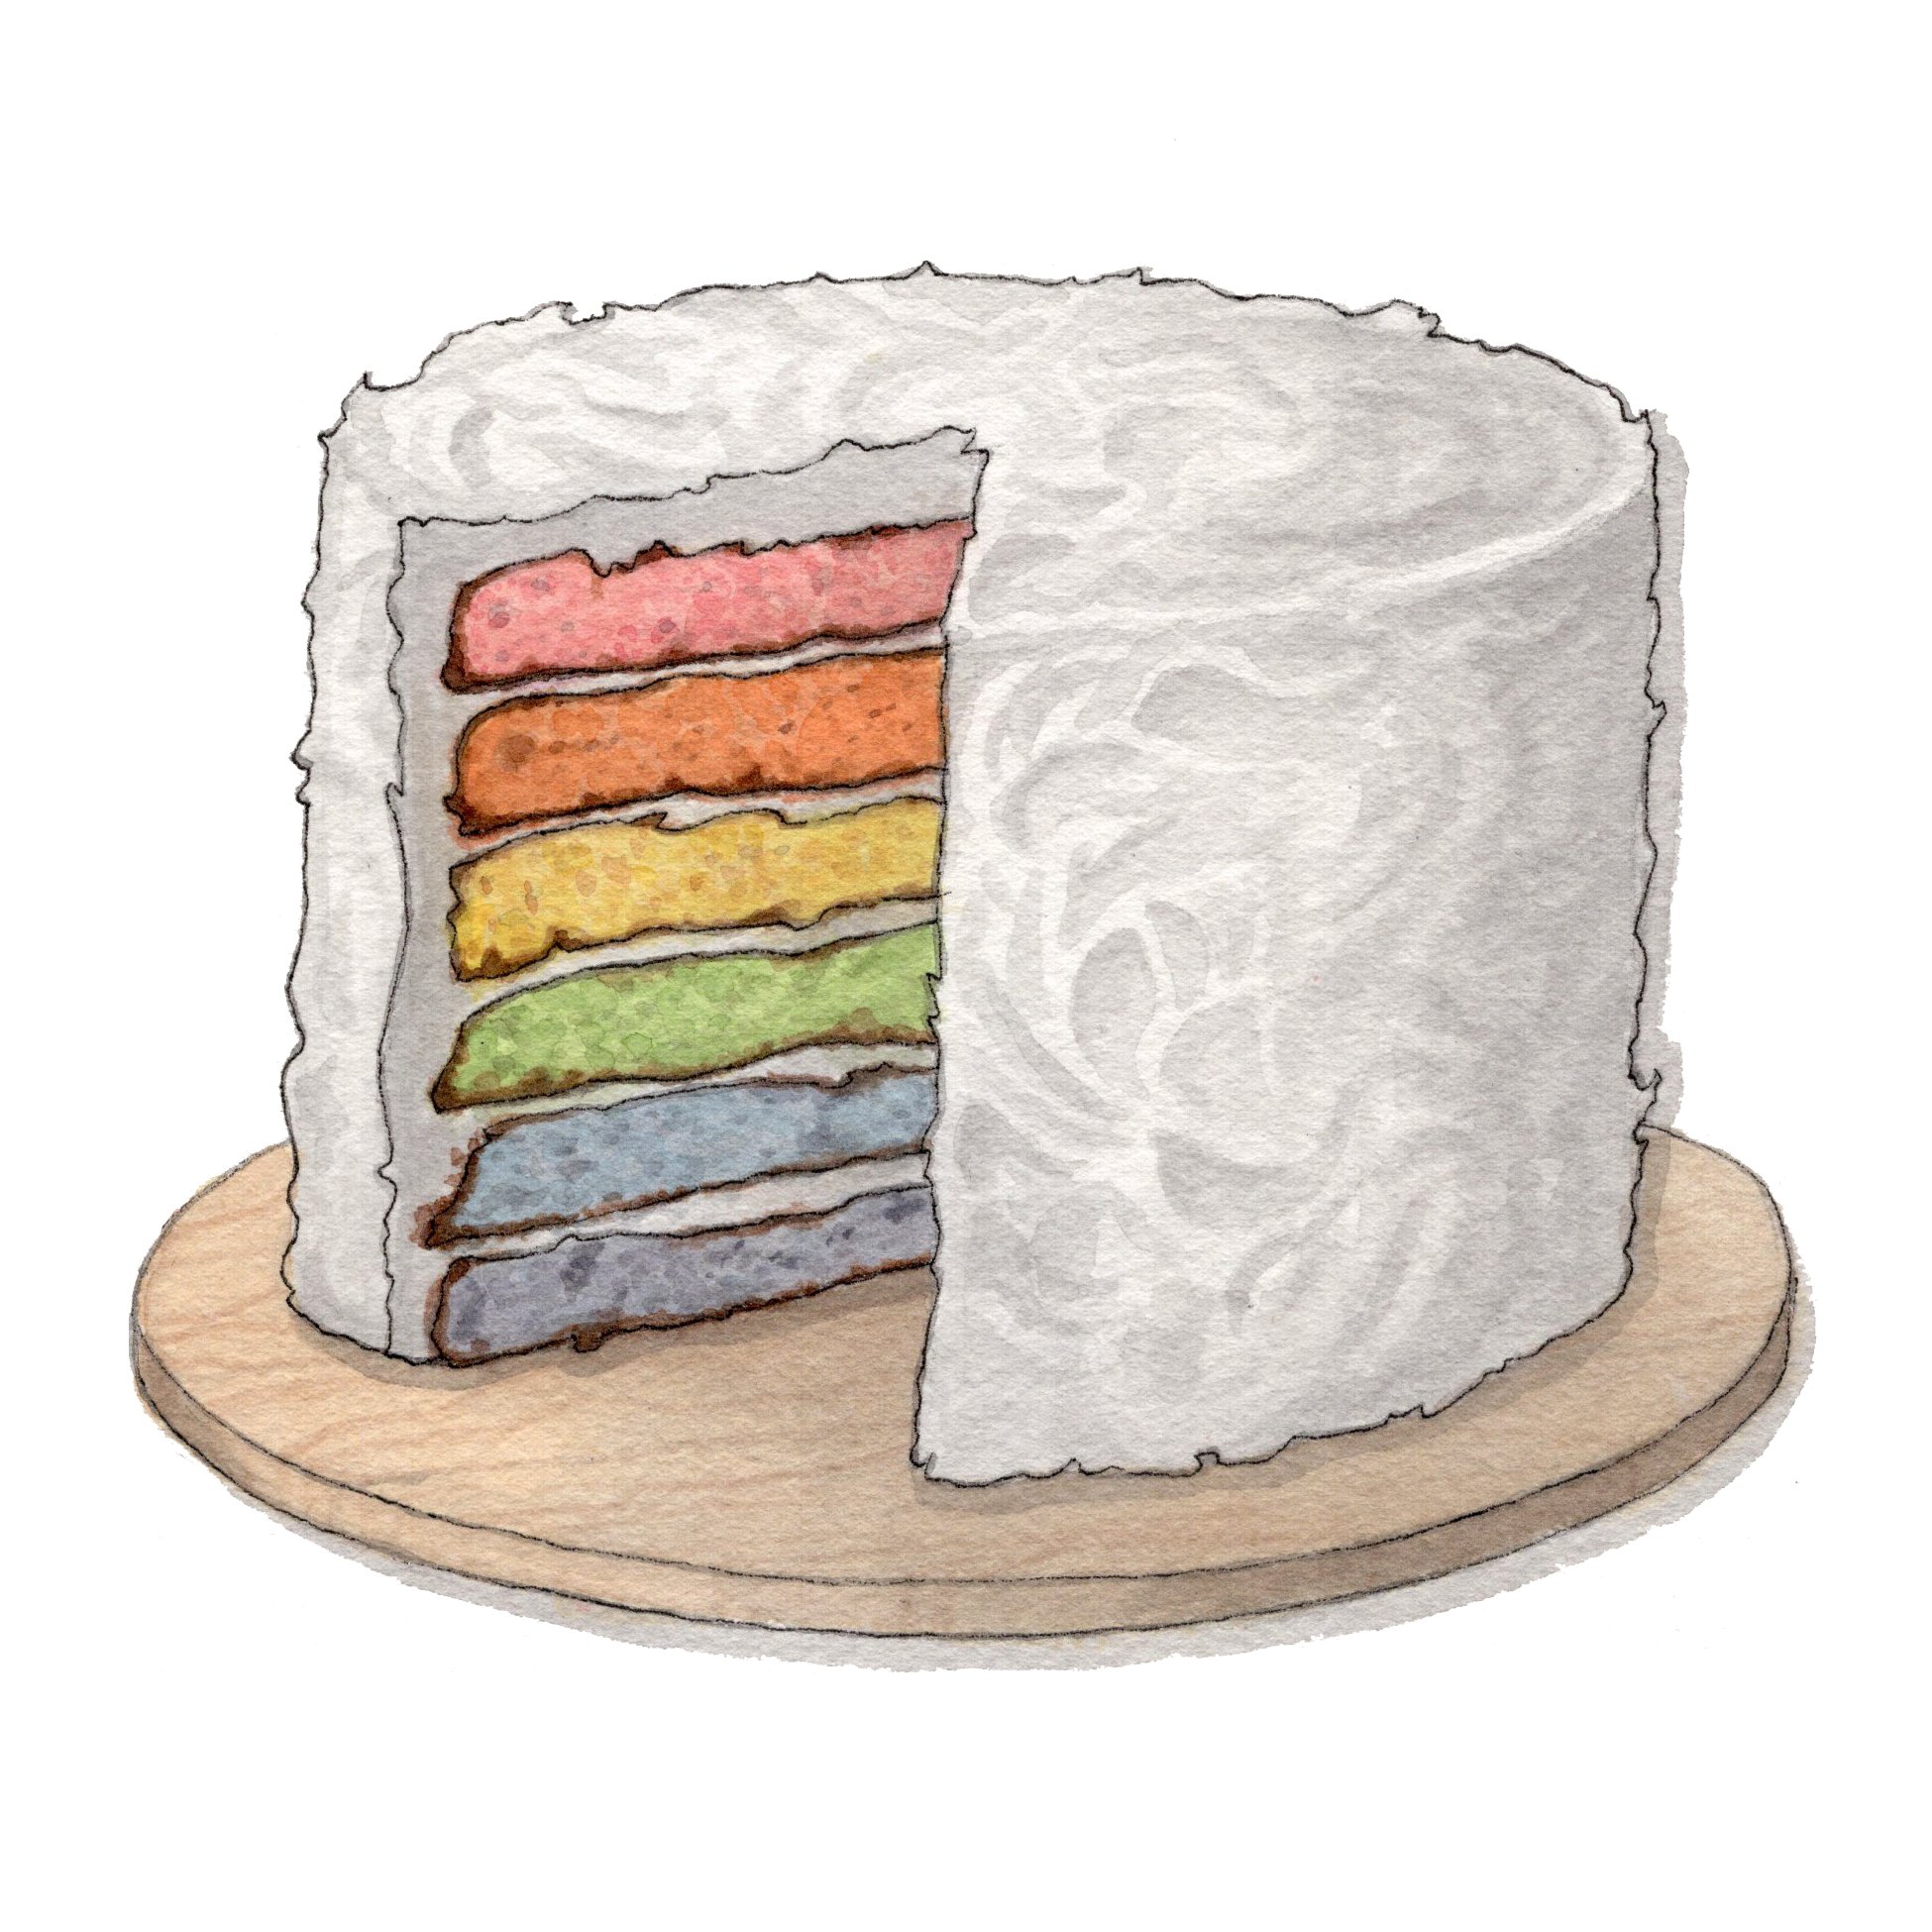 Rainbow Cake.jpg